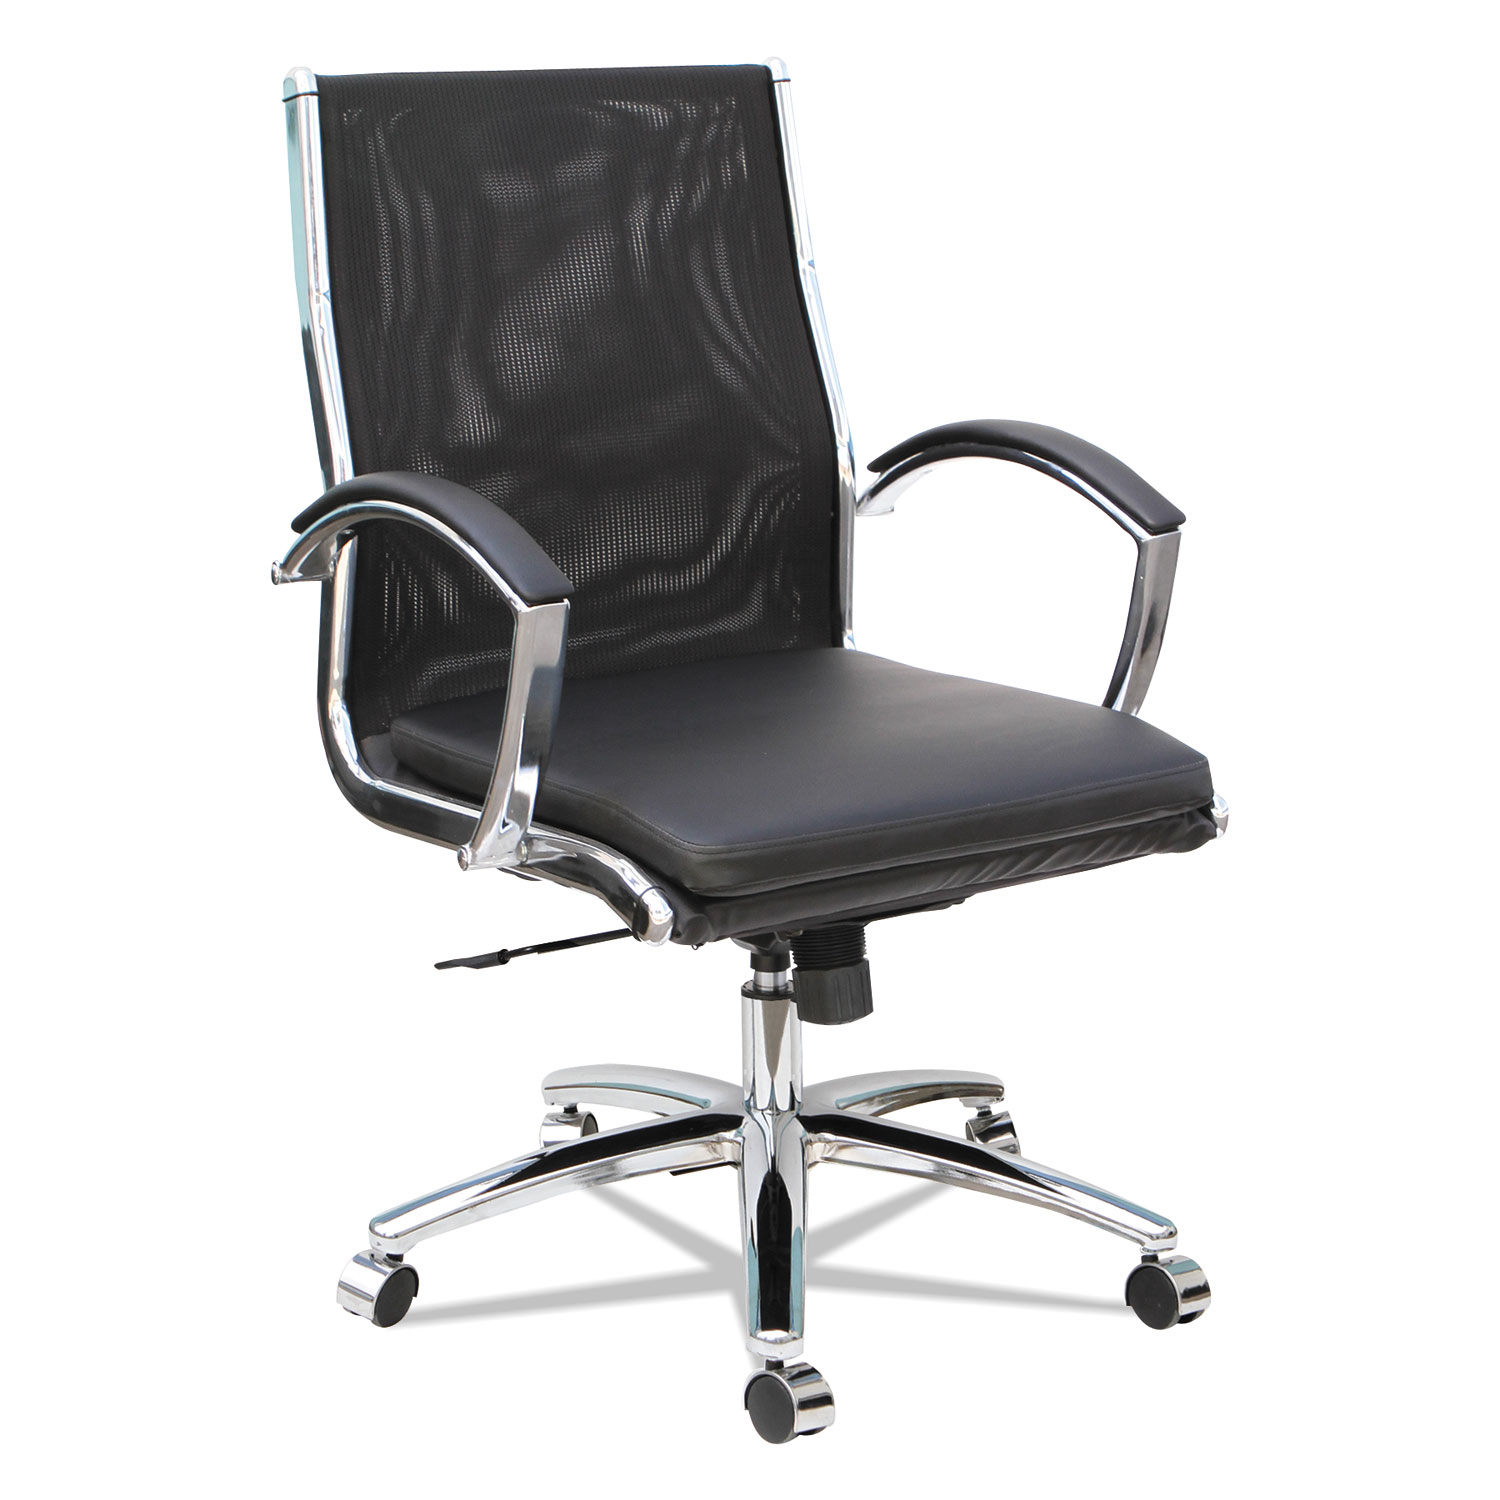 Alera Alenr4218 Leather & Mesh Neratoli Mid-back Slim Profile Chair - Black